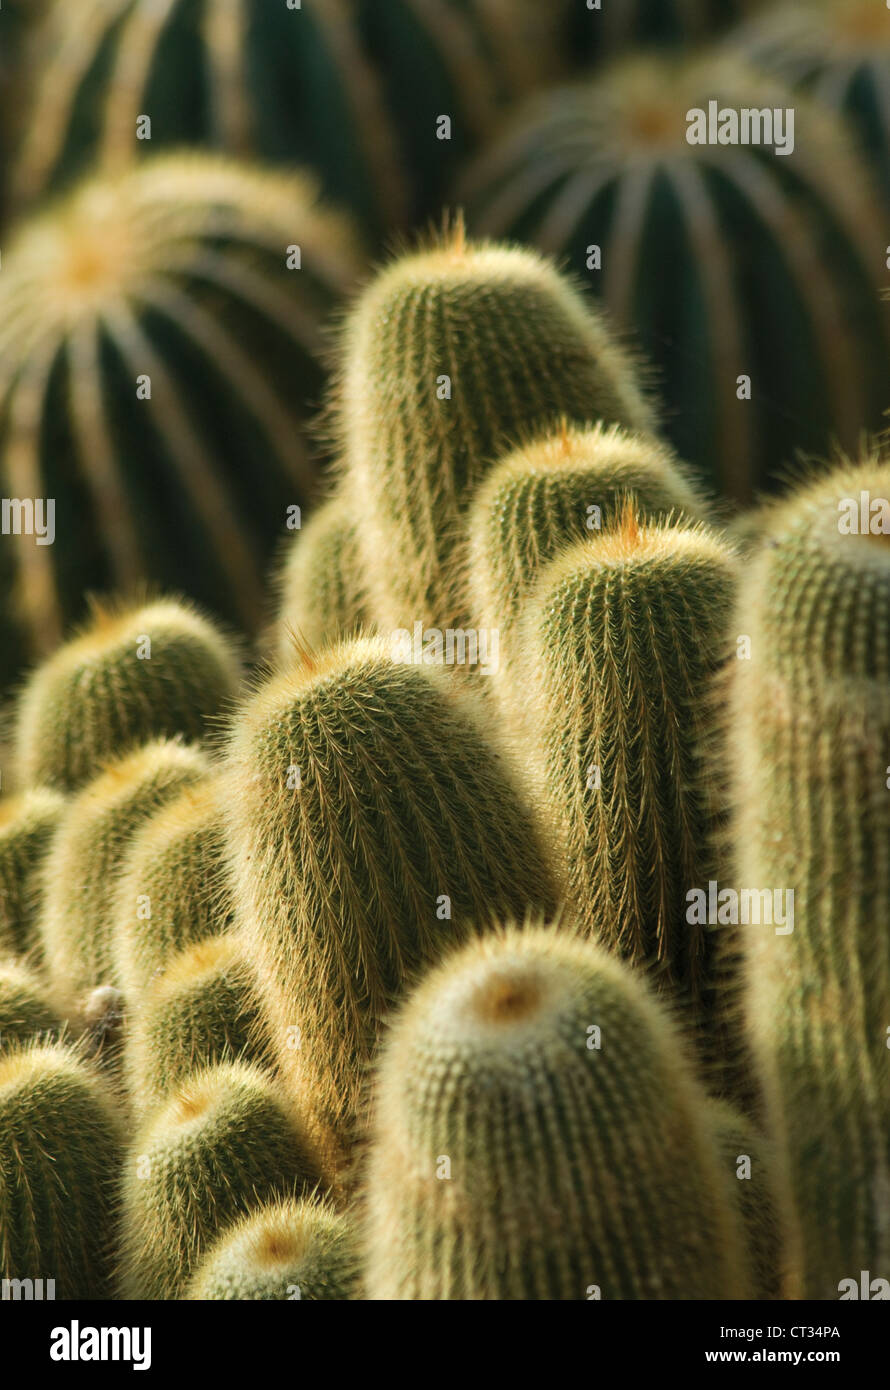 Parodia leninghausii, giallo torre cactus, ammassato in posizione verticale le piante succulente. Foto Stock